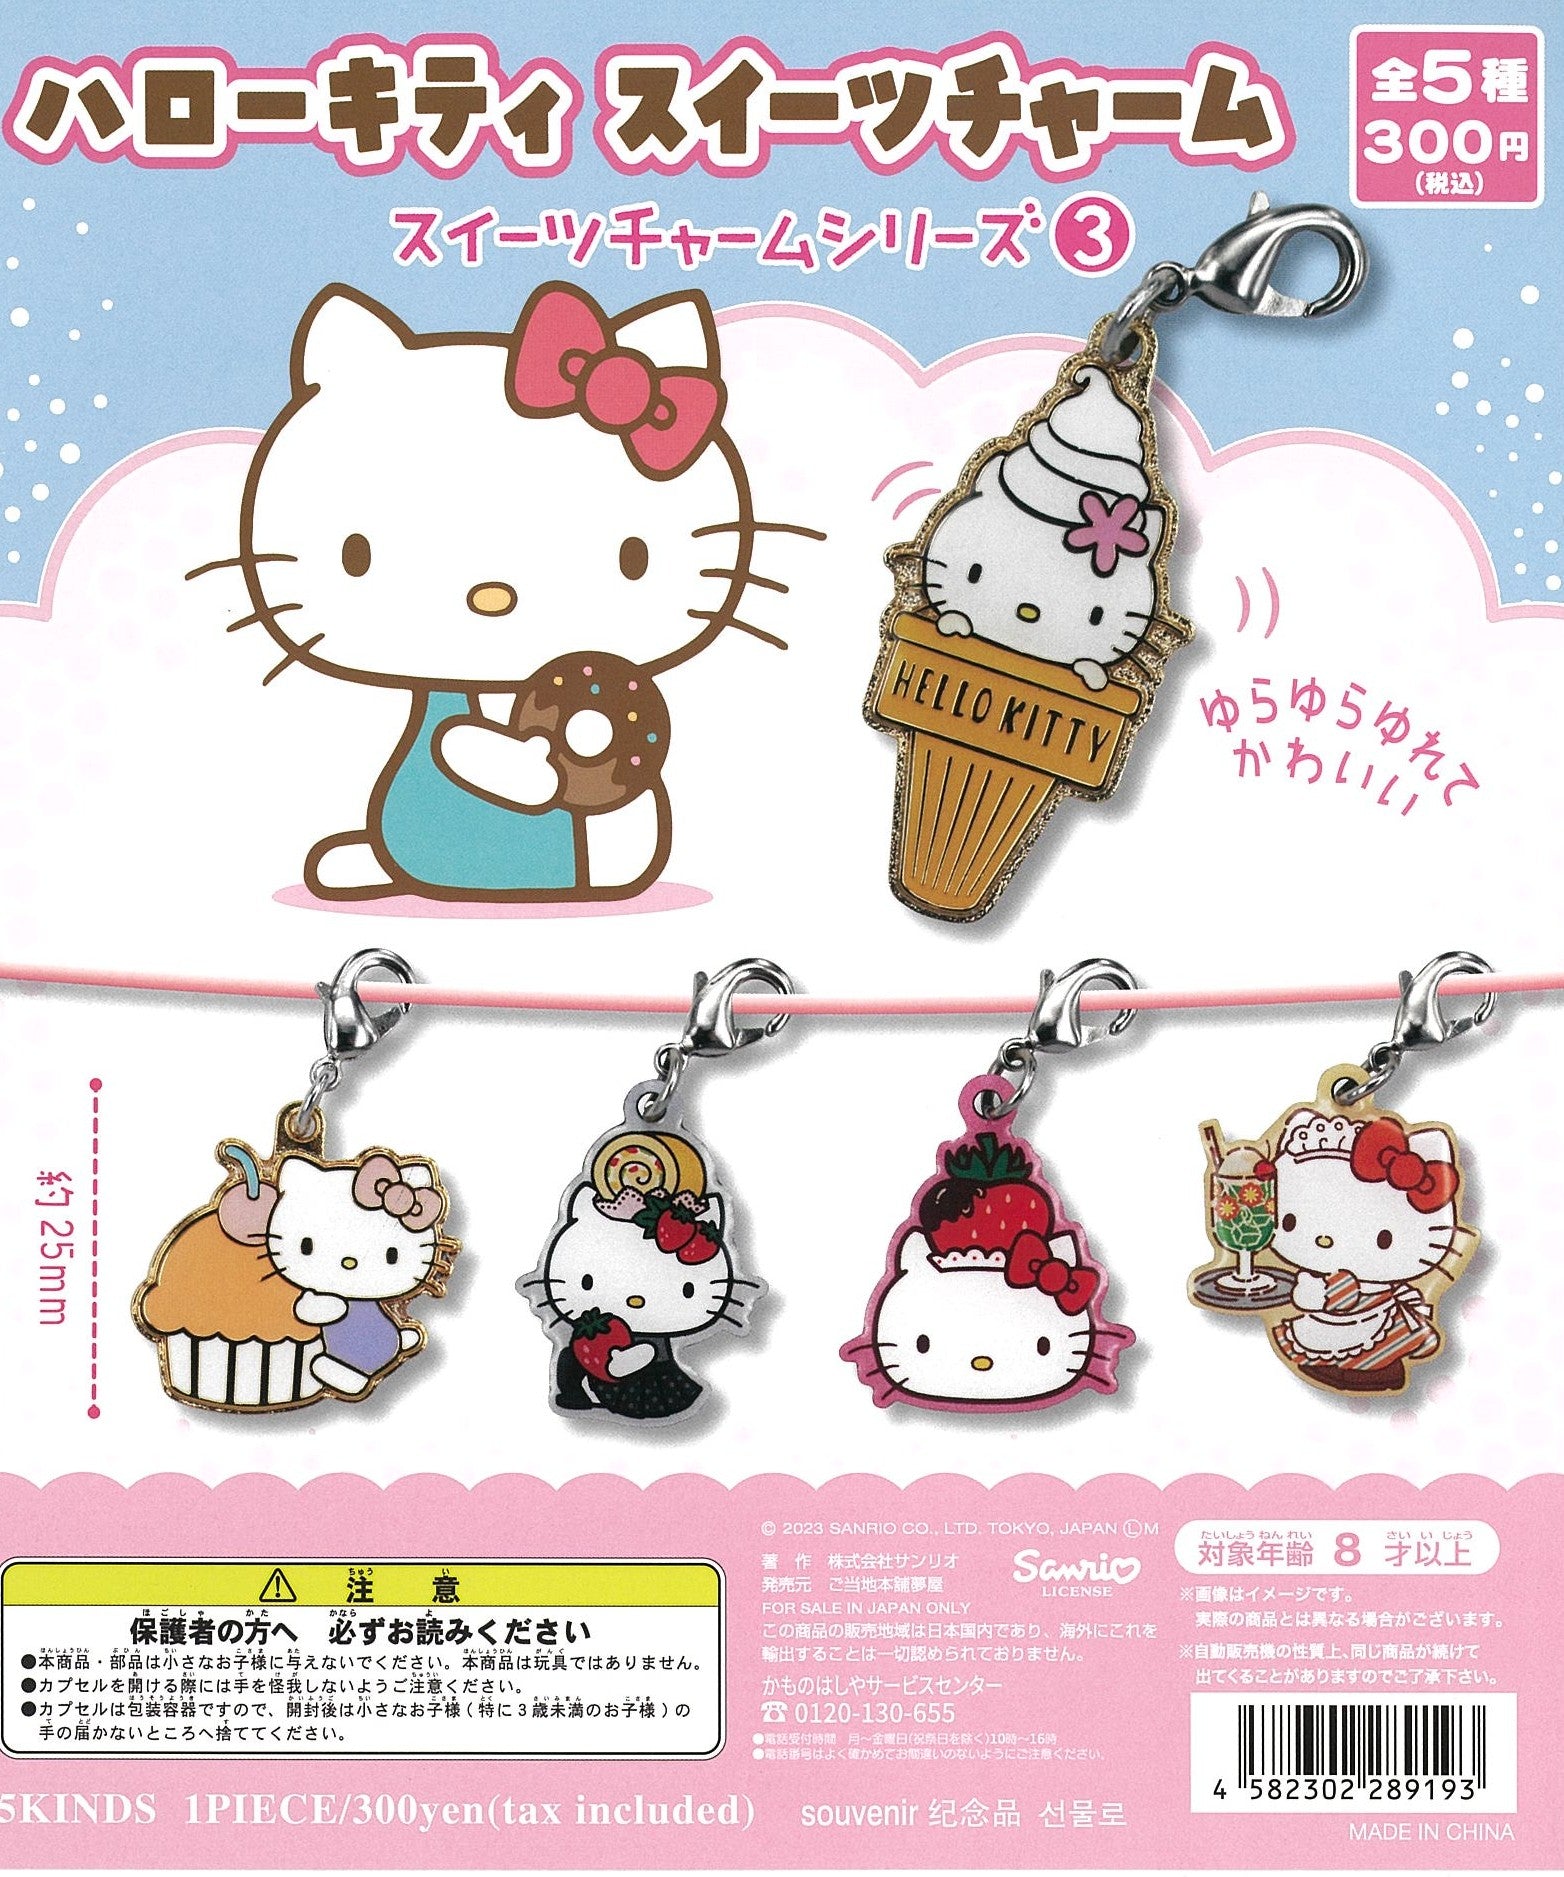 CP2508 Hello Kitty Sweets Charm